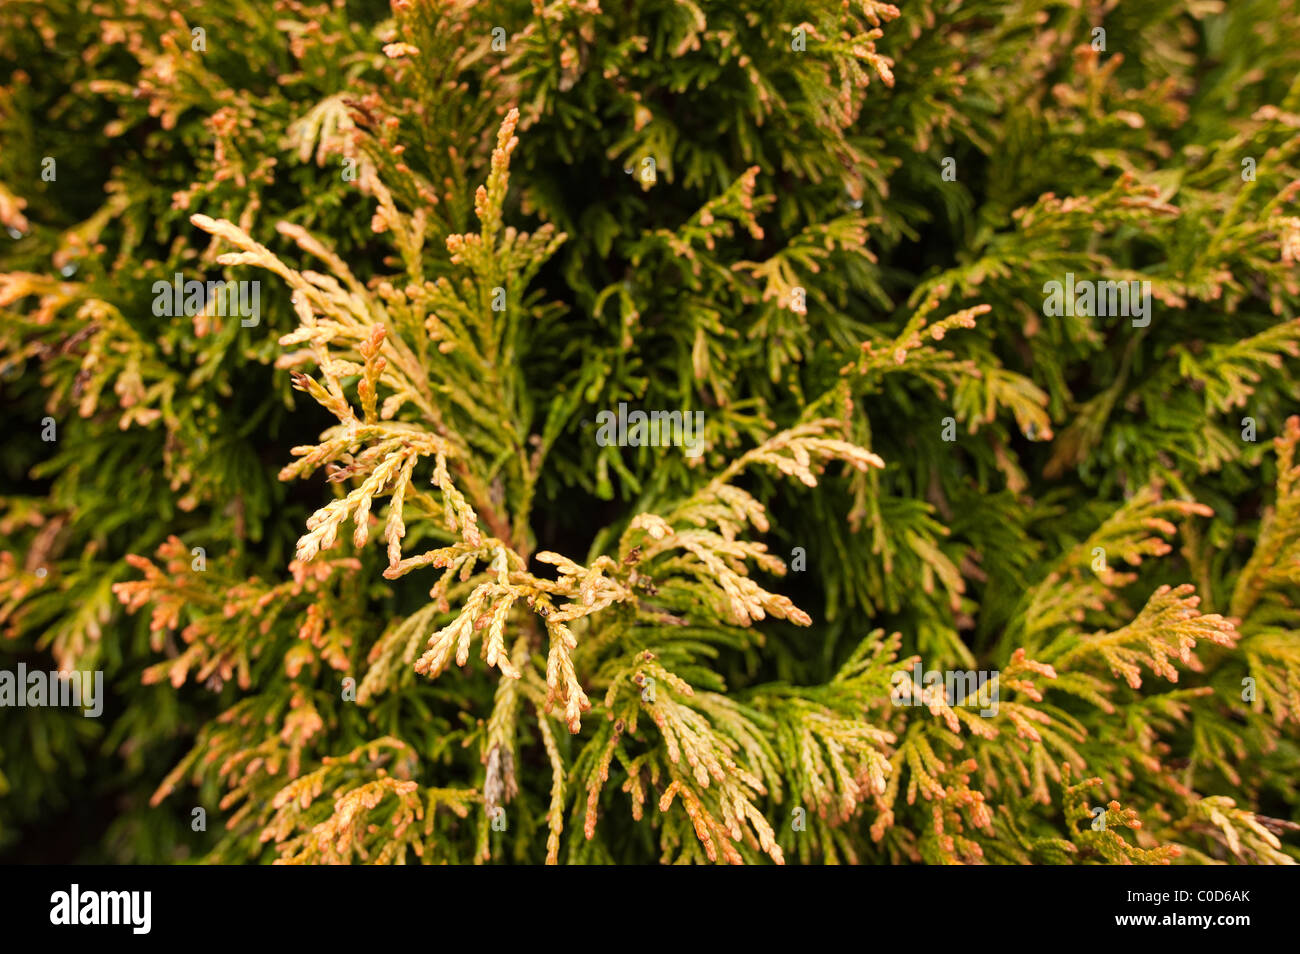 Golden Globe conifer Stock Photo